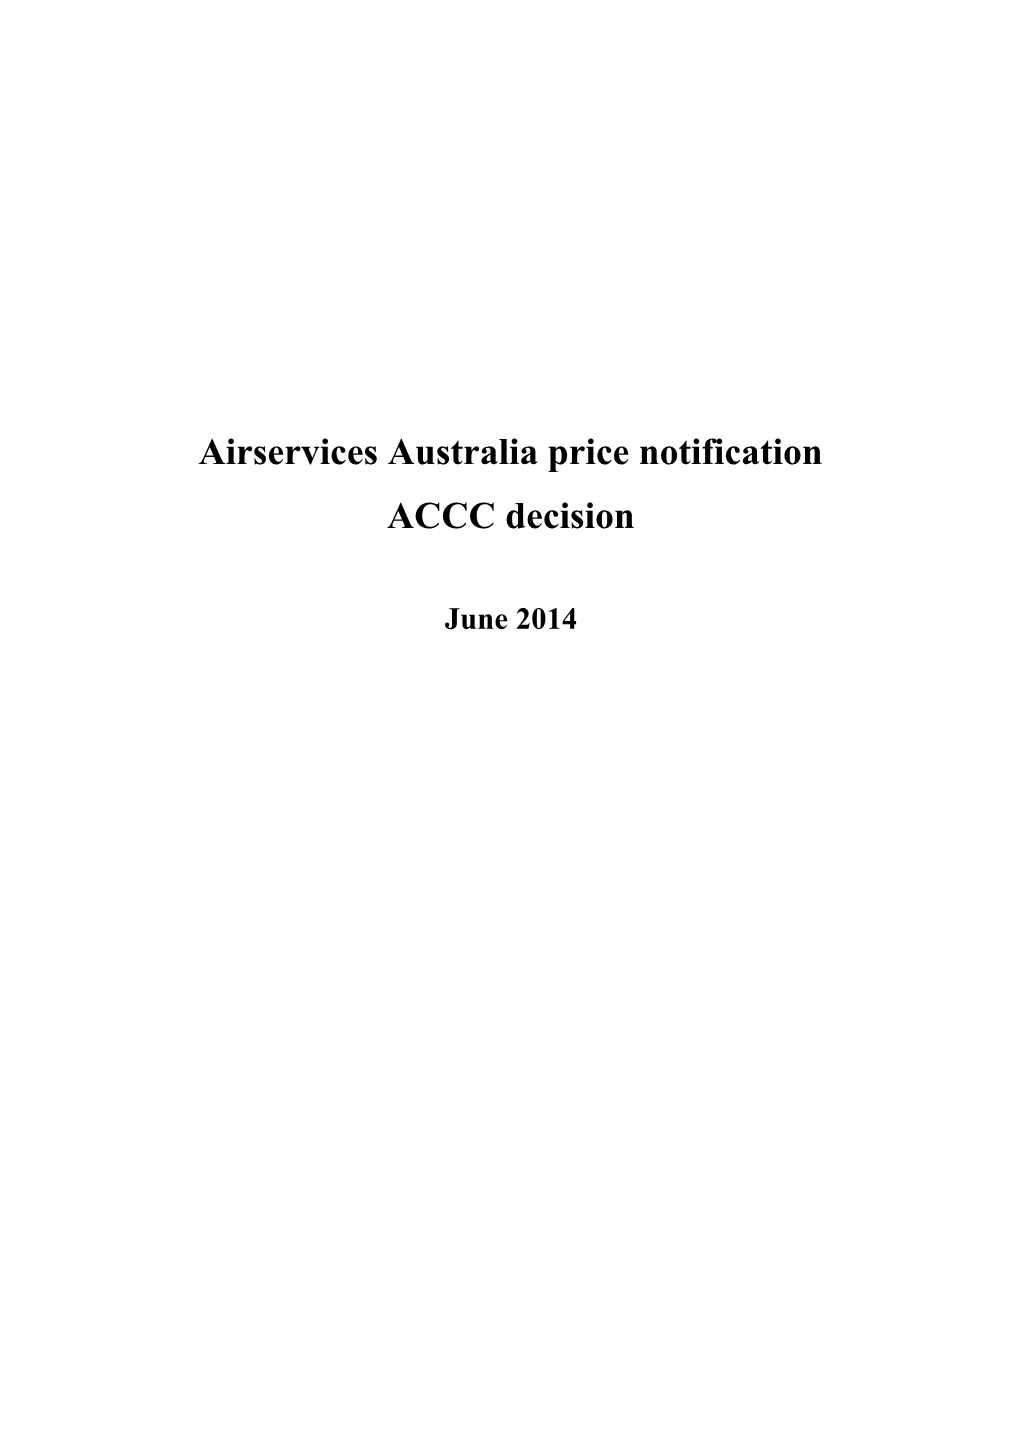 Airservices Australia Price Notification